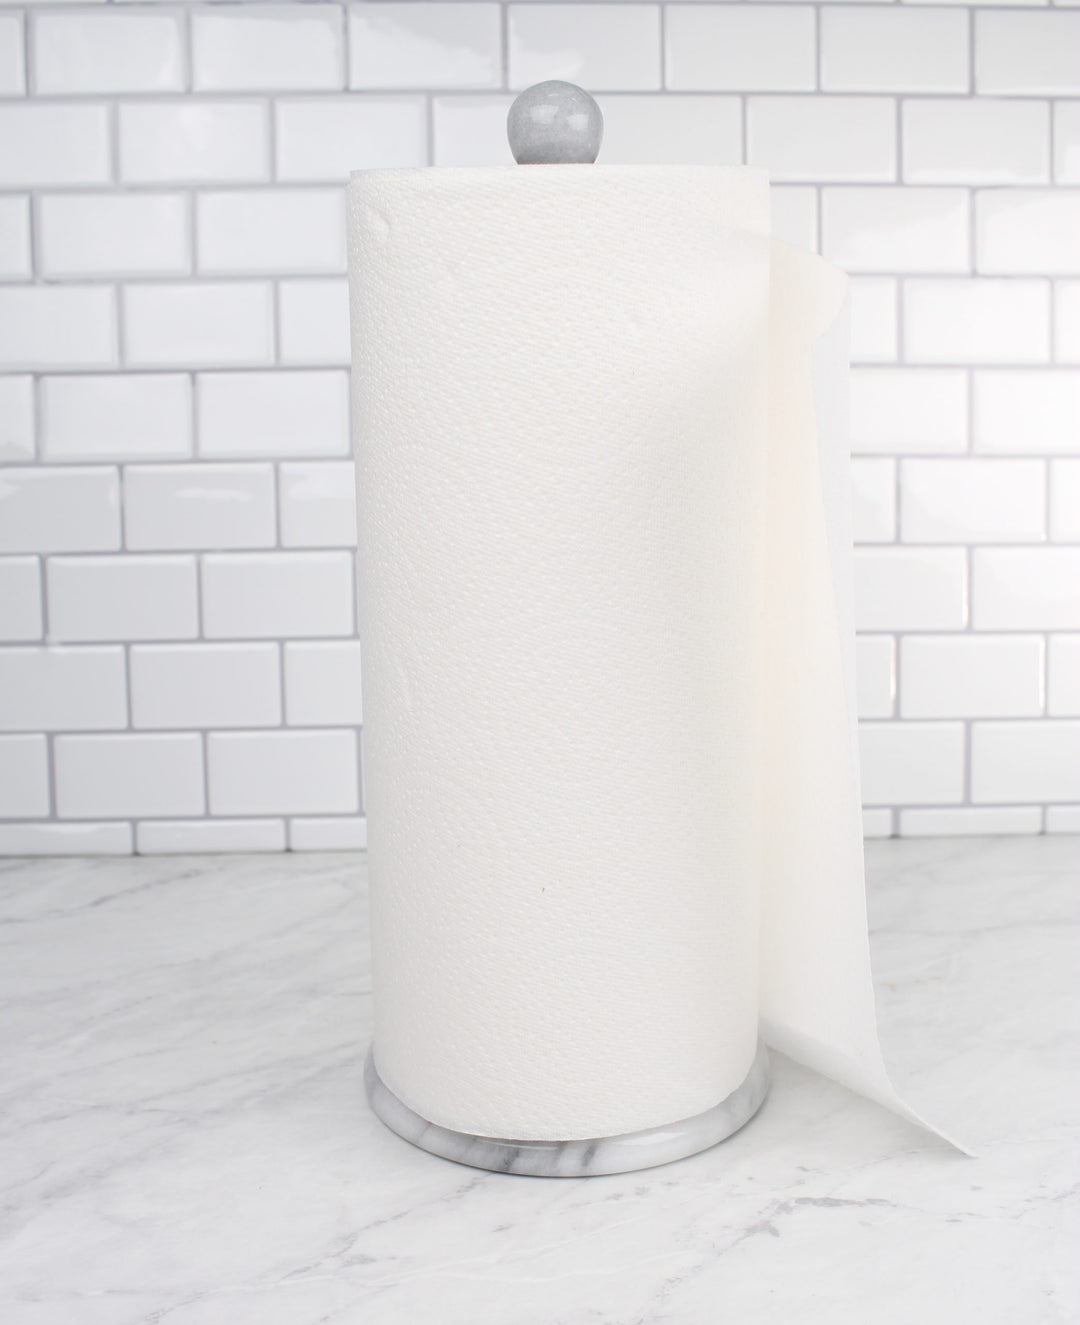 RSVP White Marble Paper Towel Holder